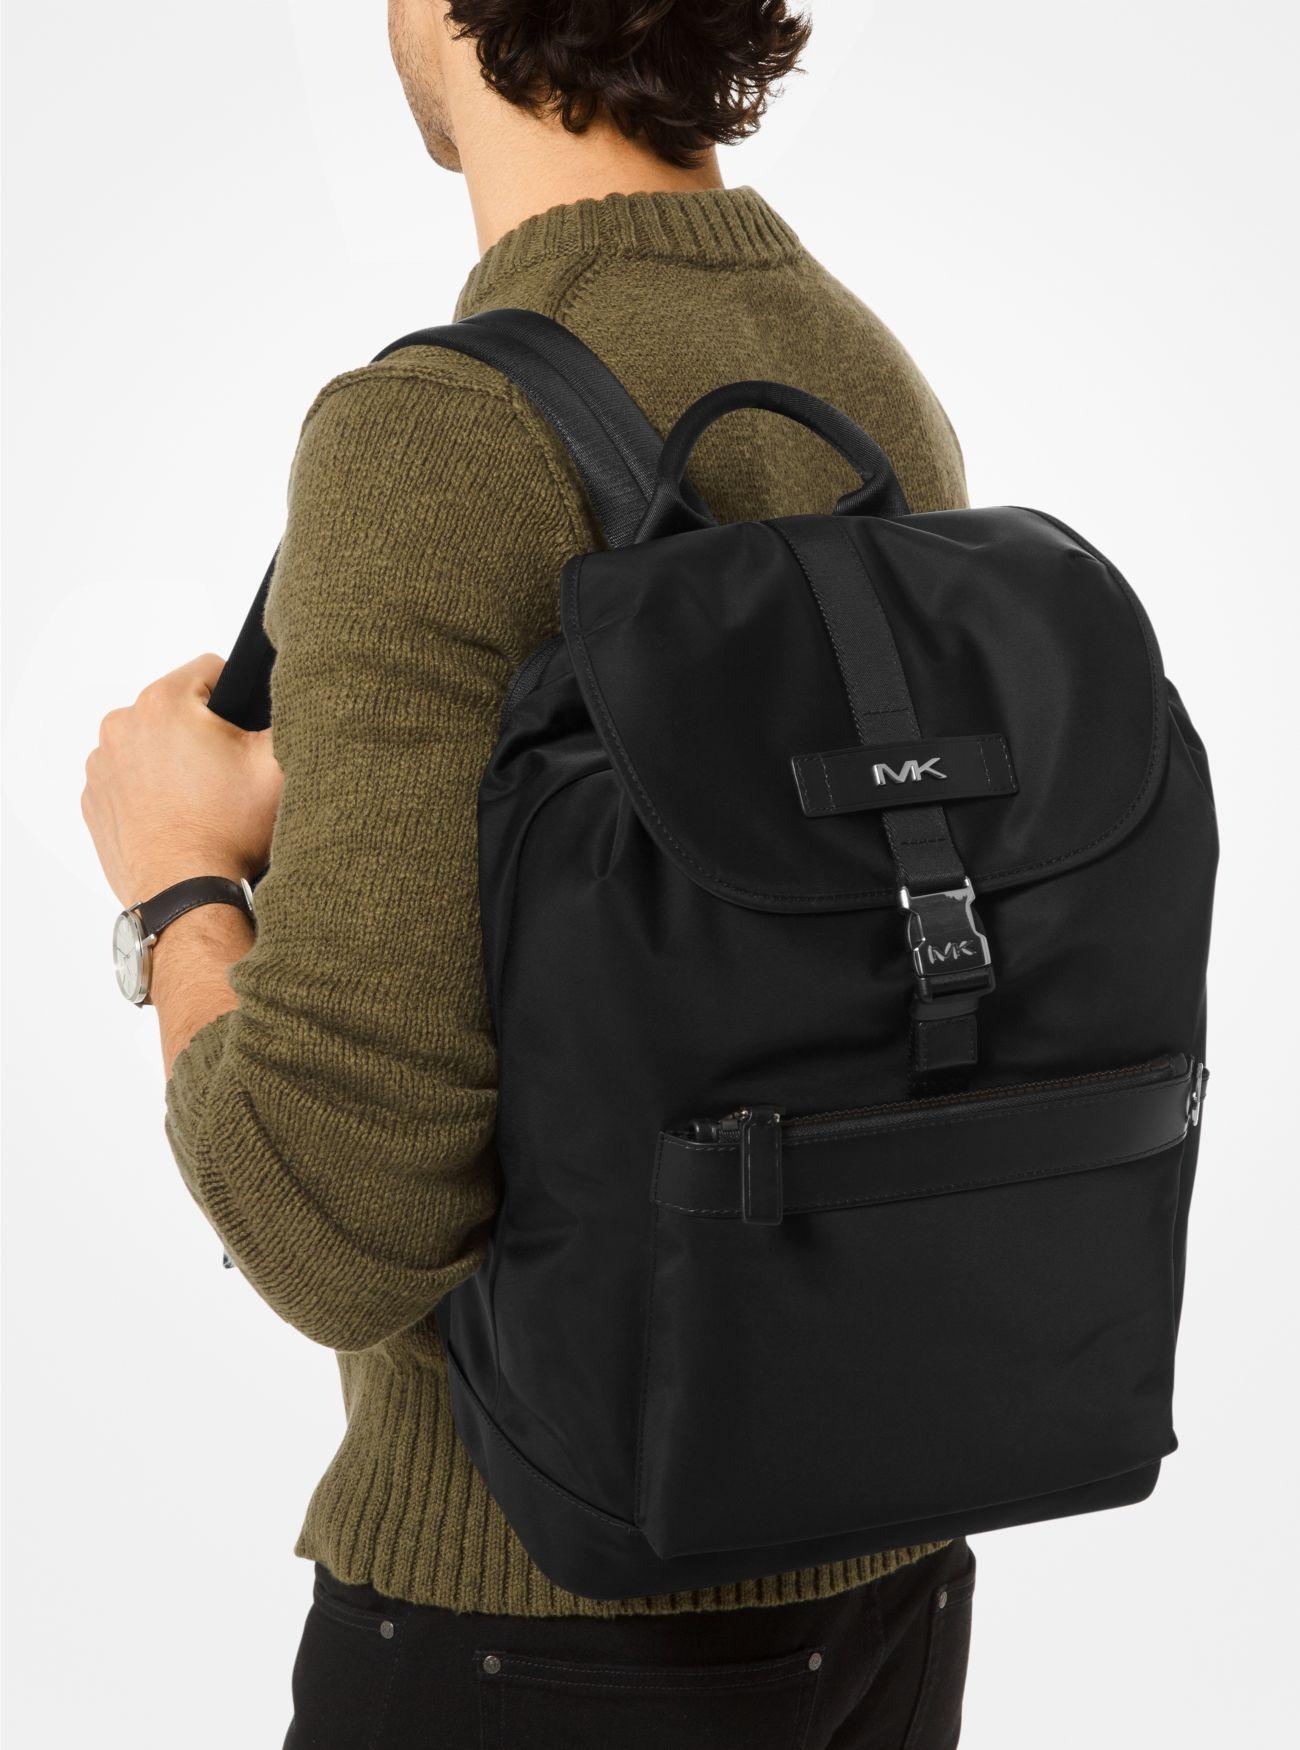 michael kors kent nylon backpack